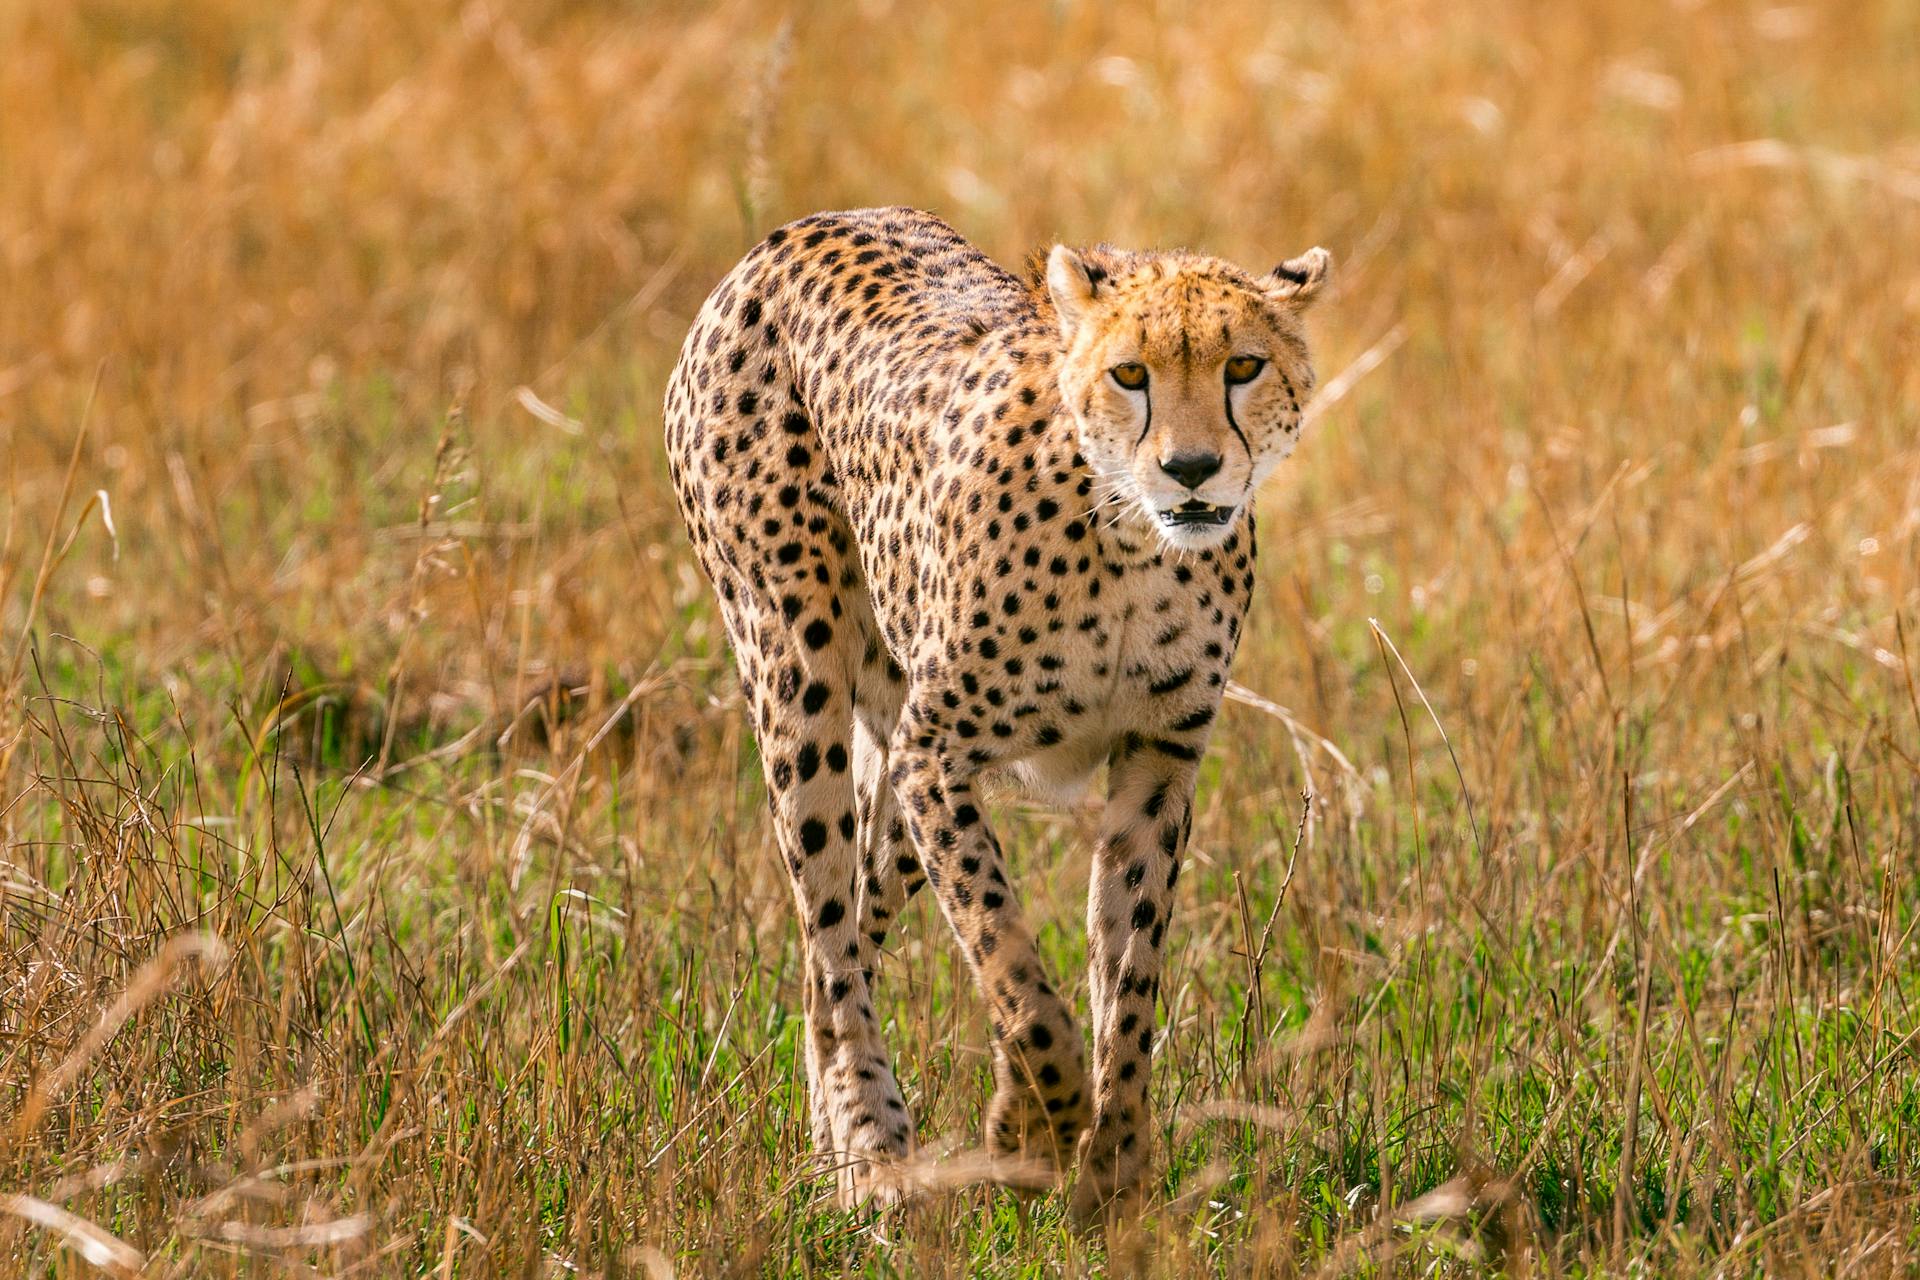 Young cheetah walking in savanna